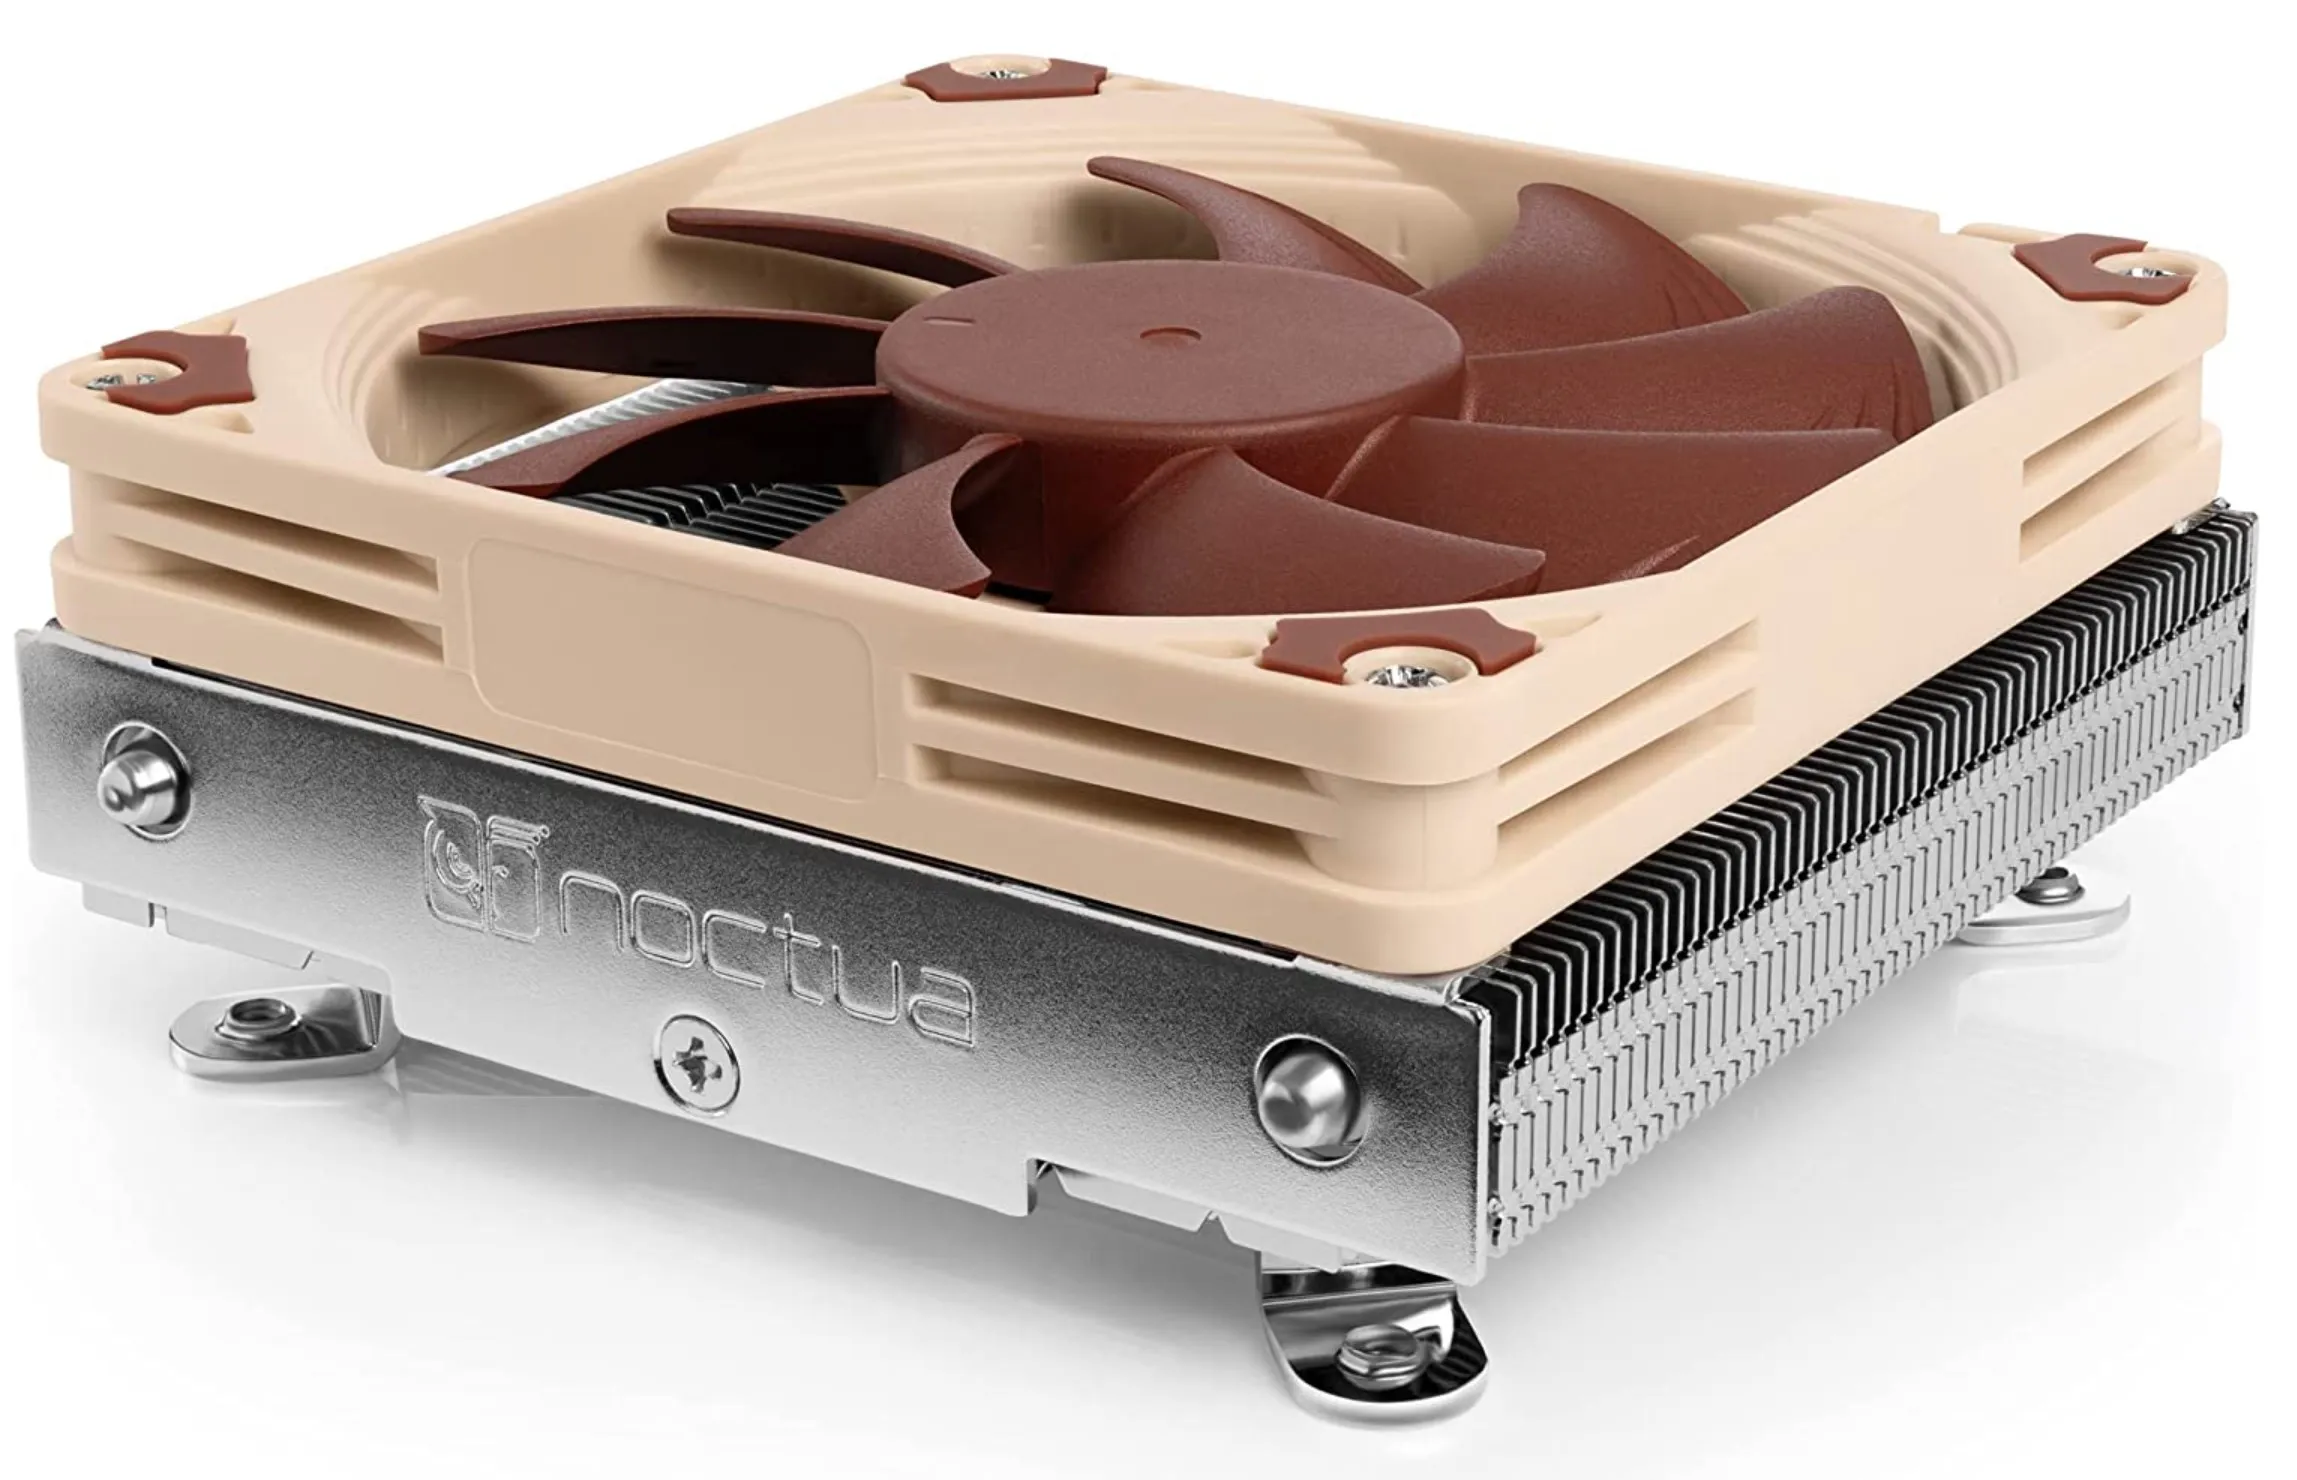 Noctua NH-L9i Low-Profile CPU Cooler